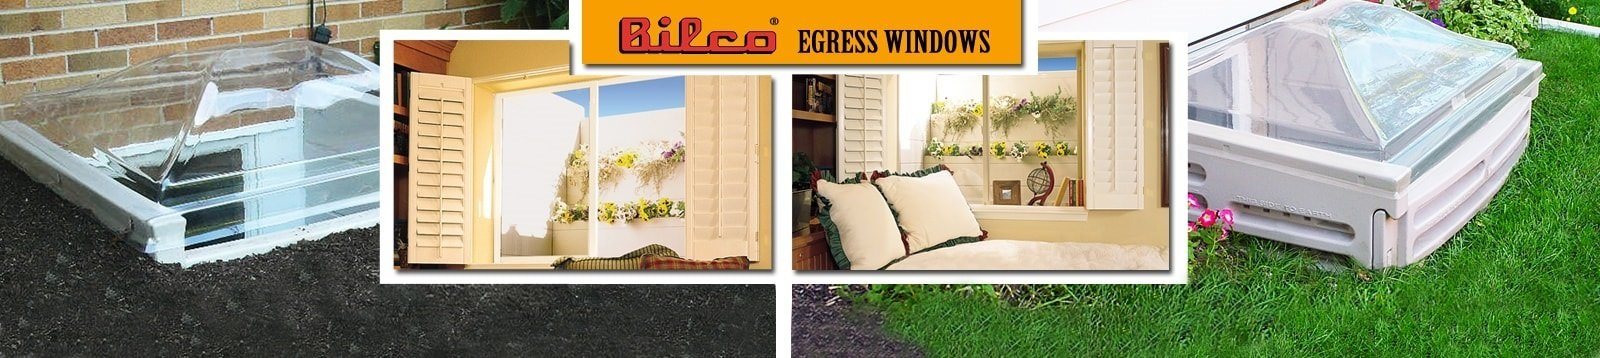 Bilco Egress Windows for Omaha, NE and Western Iowa